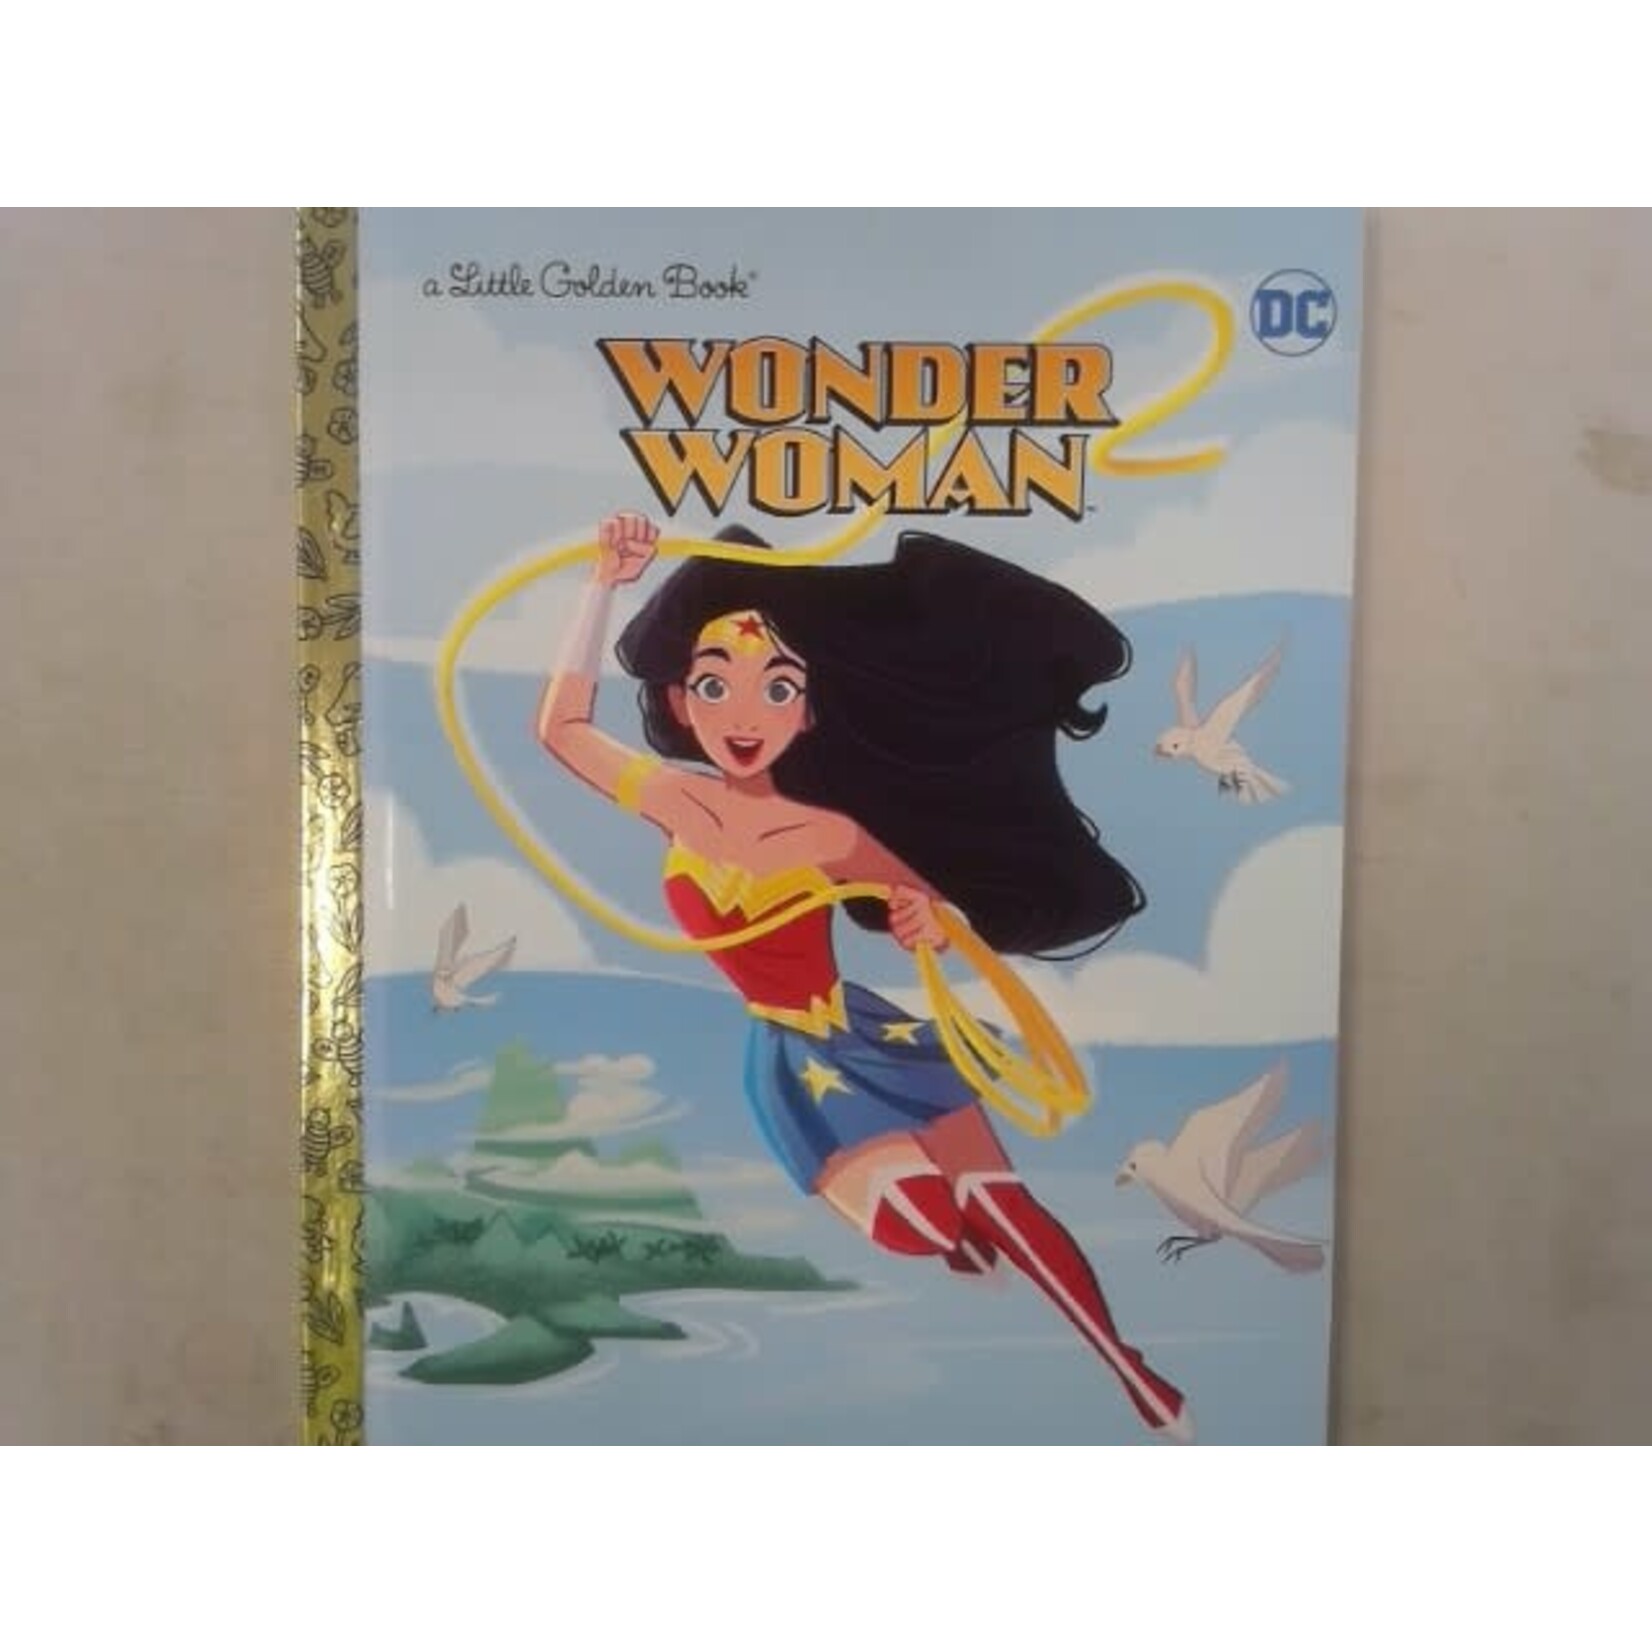 Little Golden Books Wonder Woman (DC Super Heroes: Wonder Woman)